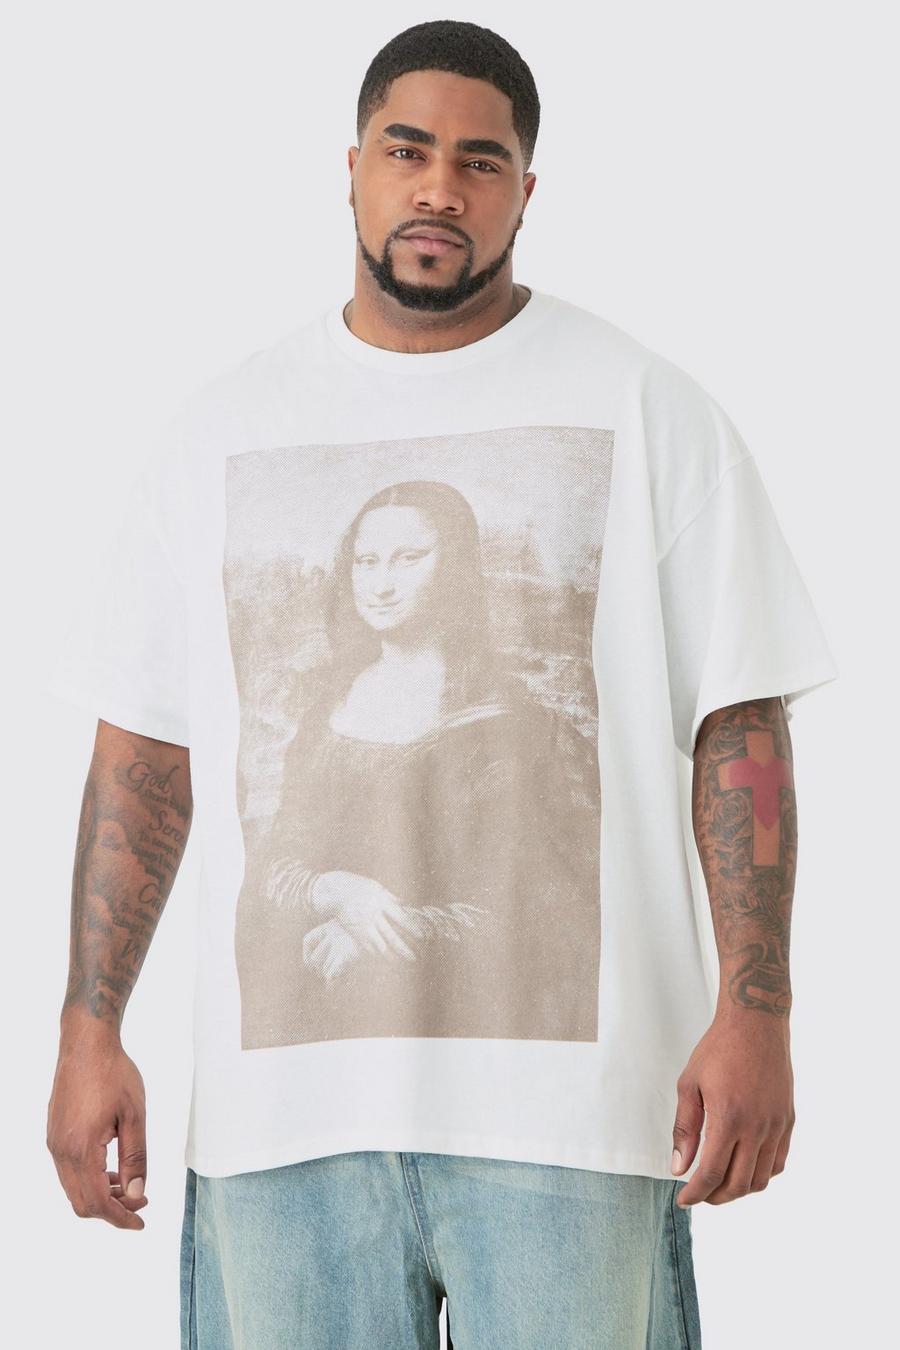 Plus Mona Lisa Licence T-shirt In White